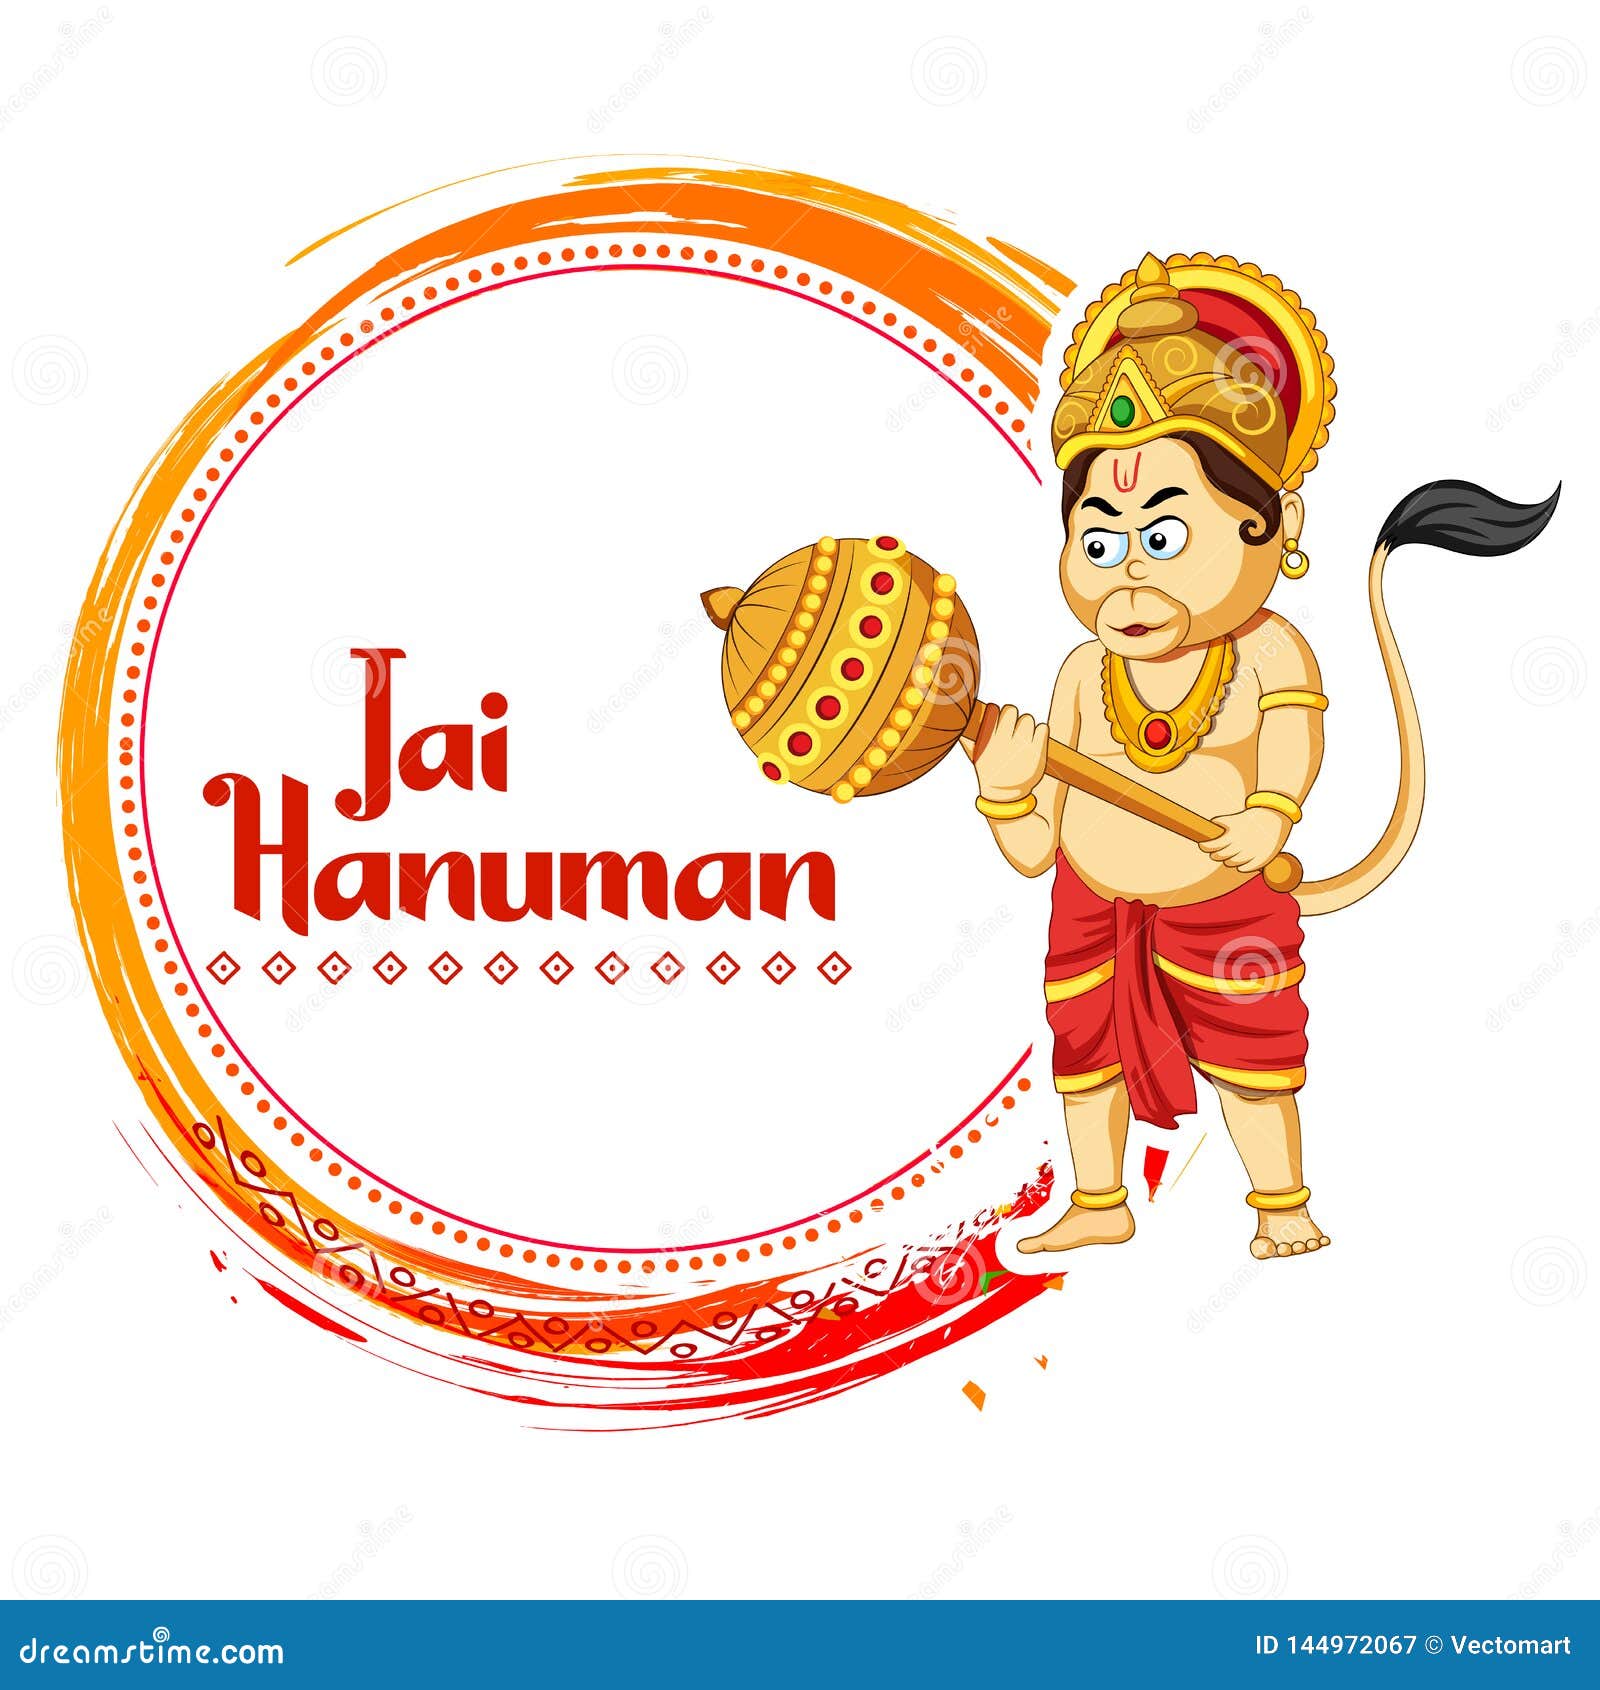 Lord Hanuman on Abstract Background for Hanuman Jayanti Festival of India  Stock Vector - Illustration of historical, monkey: 144972067